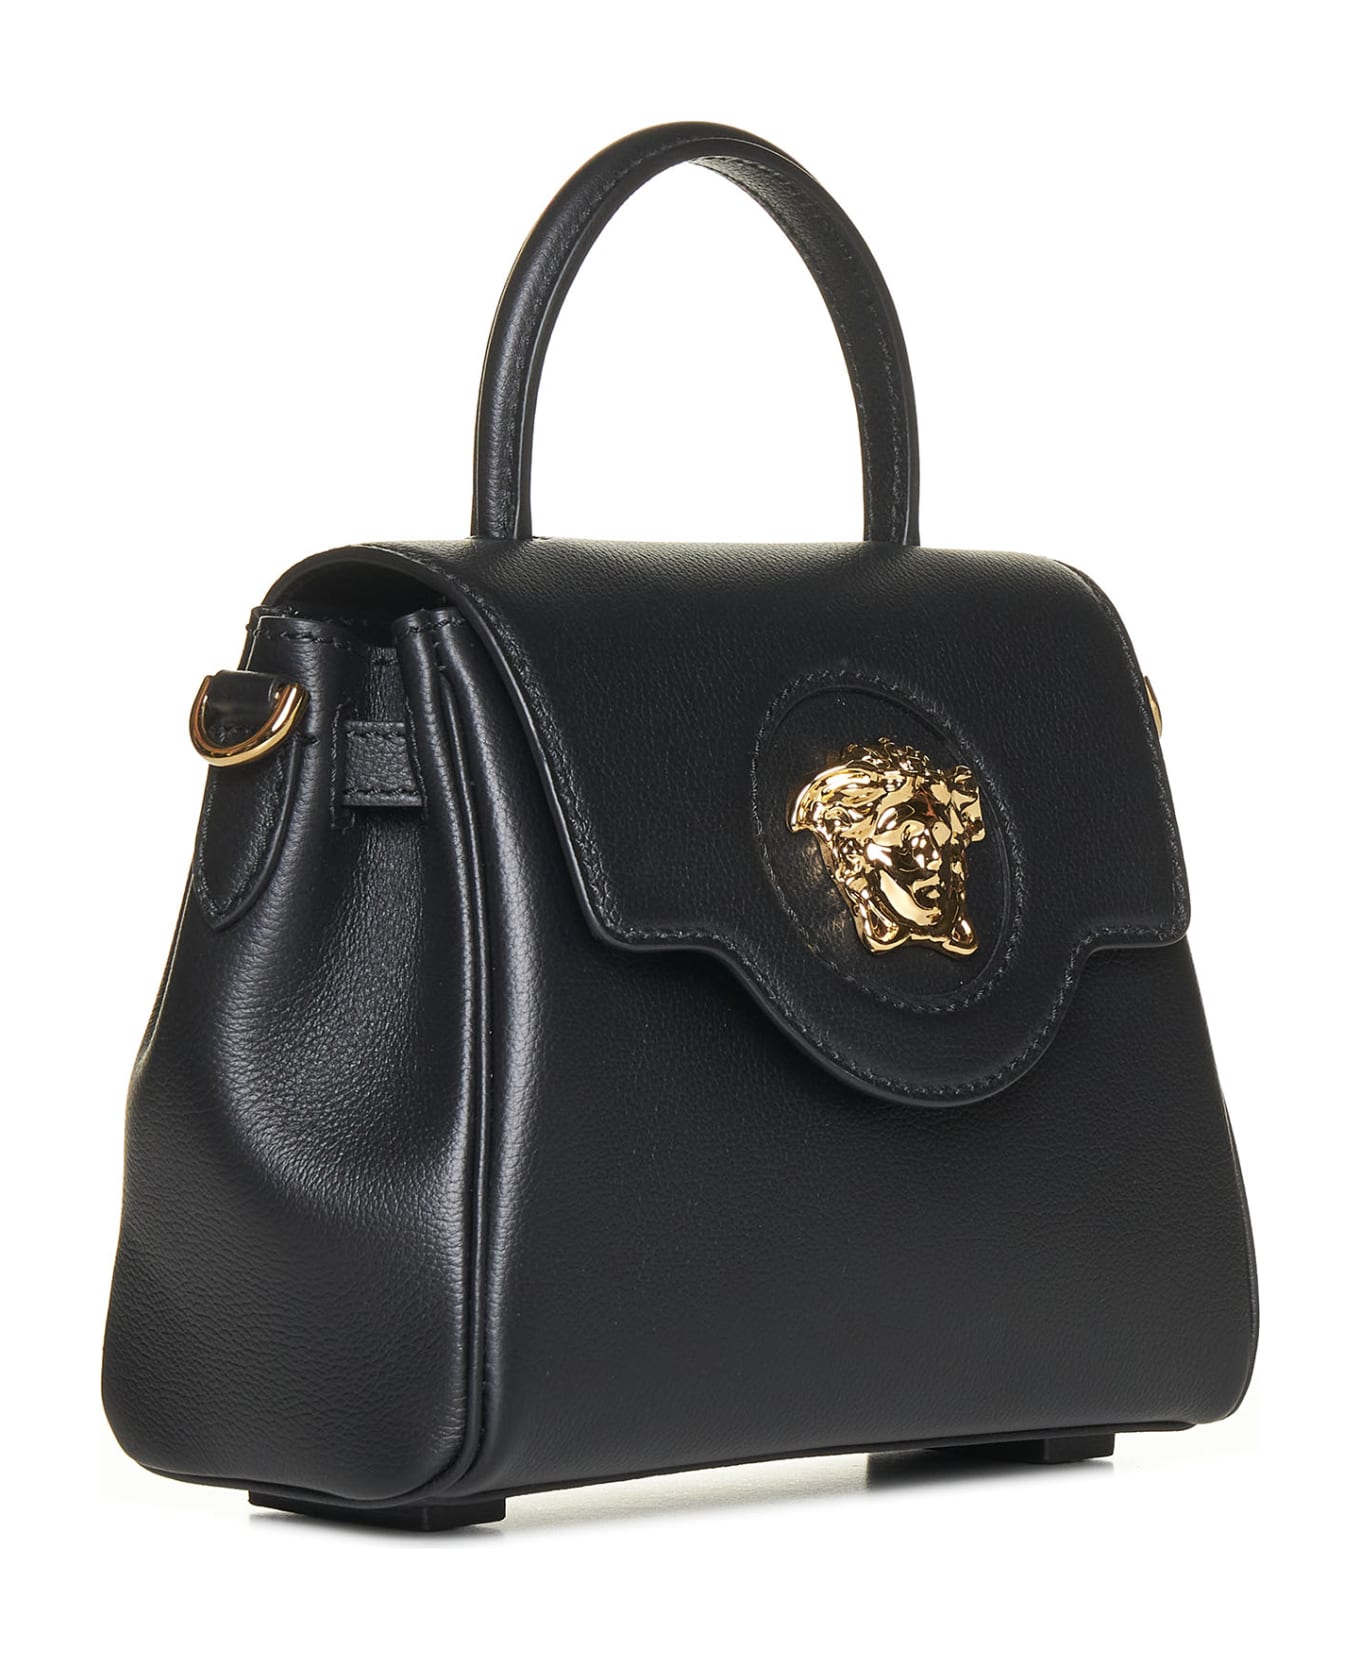 Versace La Medusa Small Leather Bag - Nero/oro Versace トートバッグ